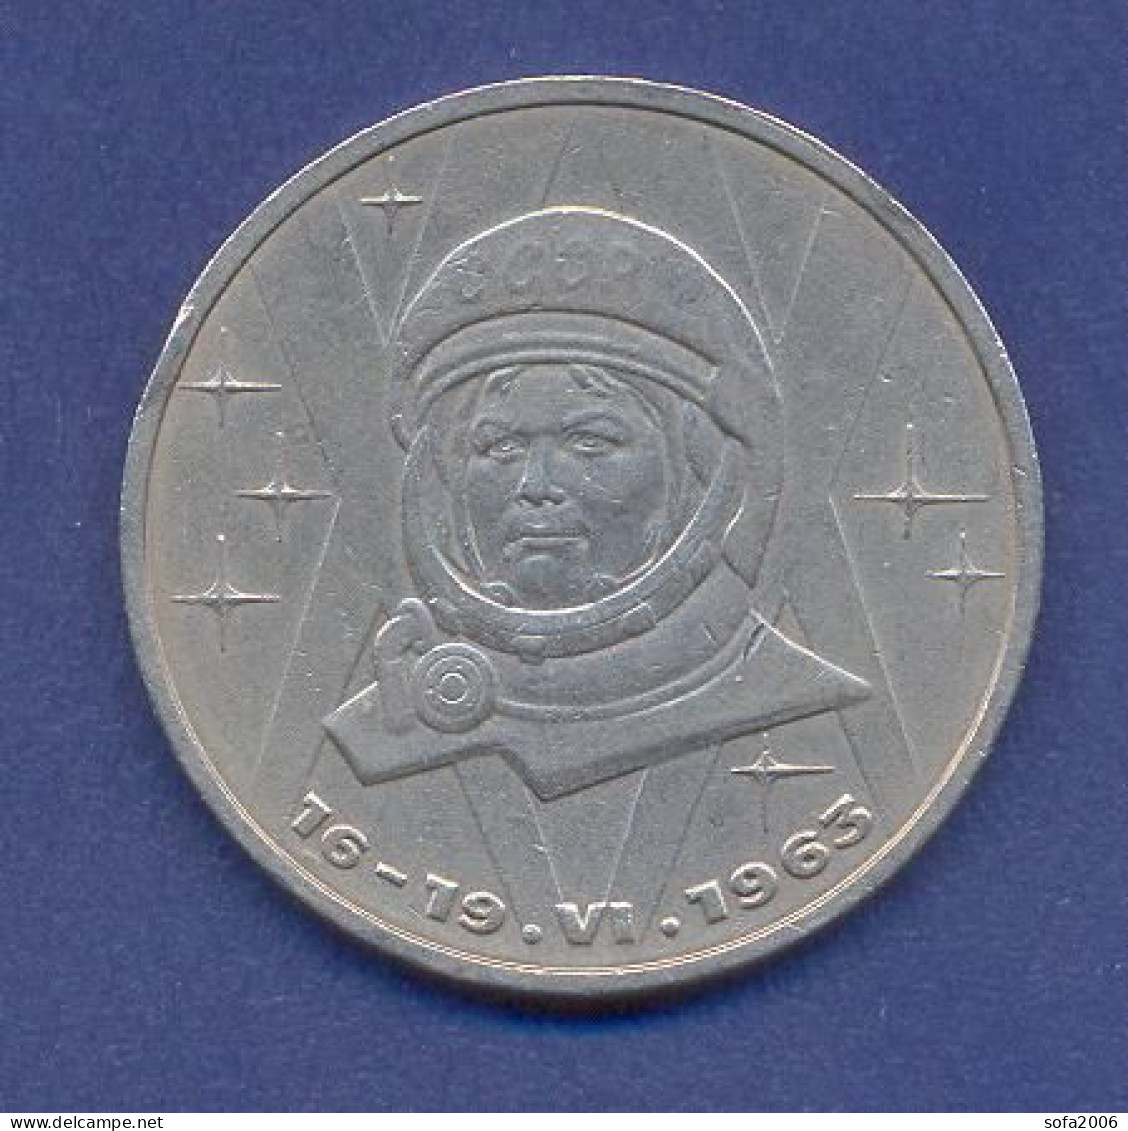 Soviet Union(USSR). RUSSIA 1 Rouble, Ruble.1983. Tereshkova. - Russia